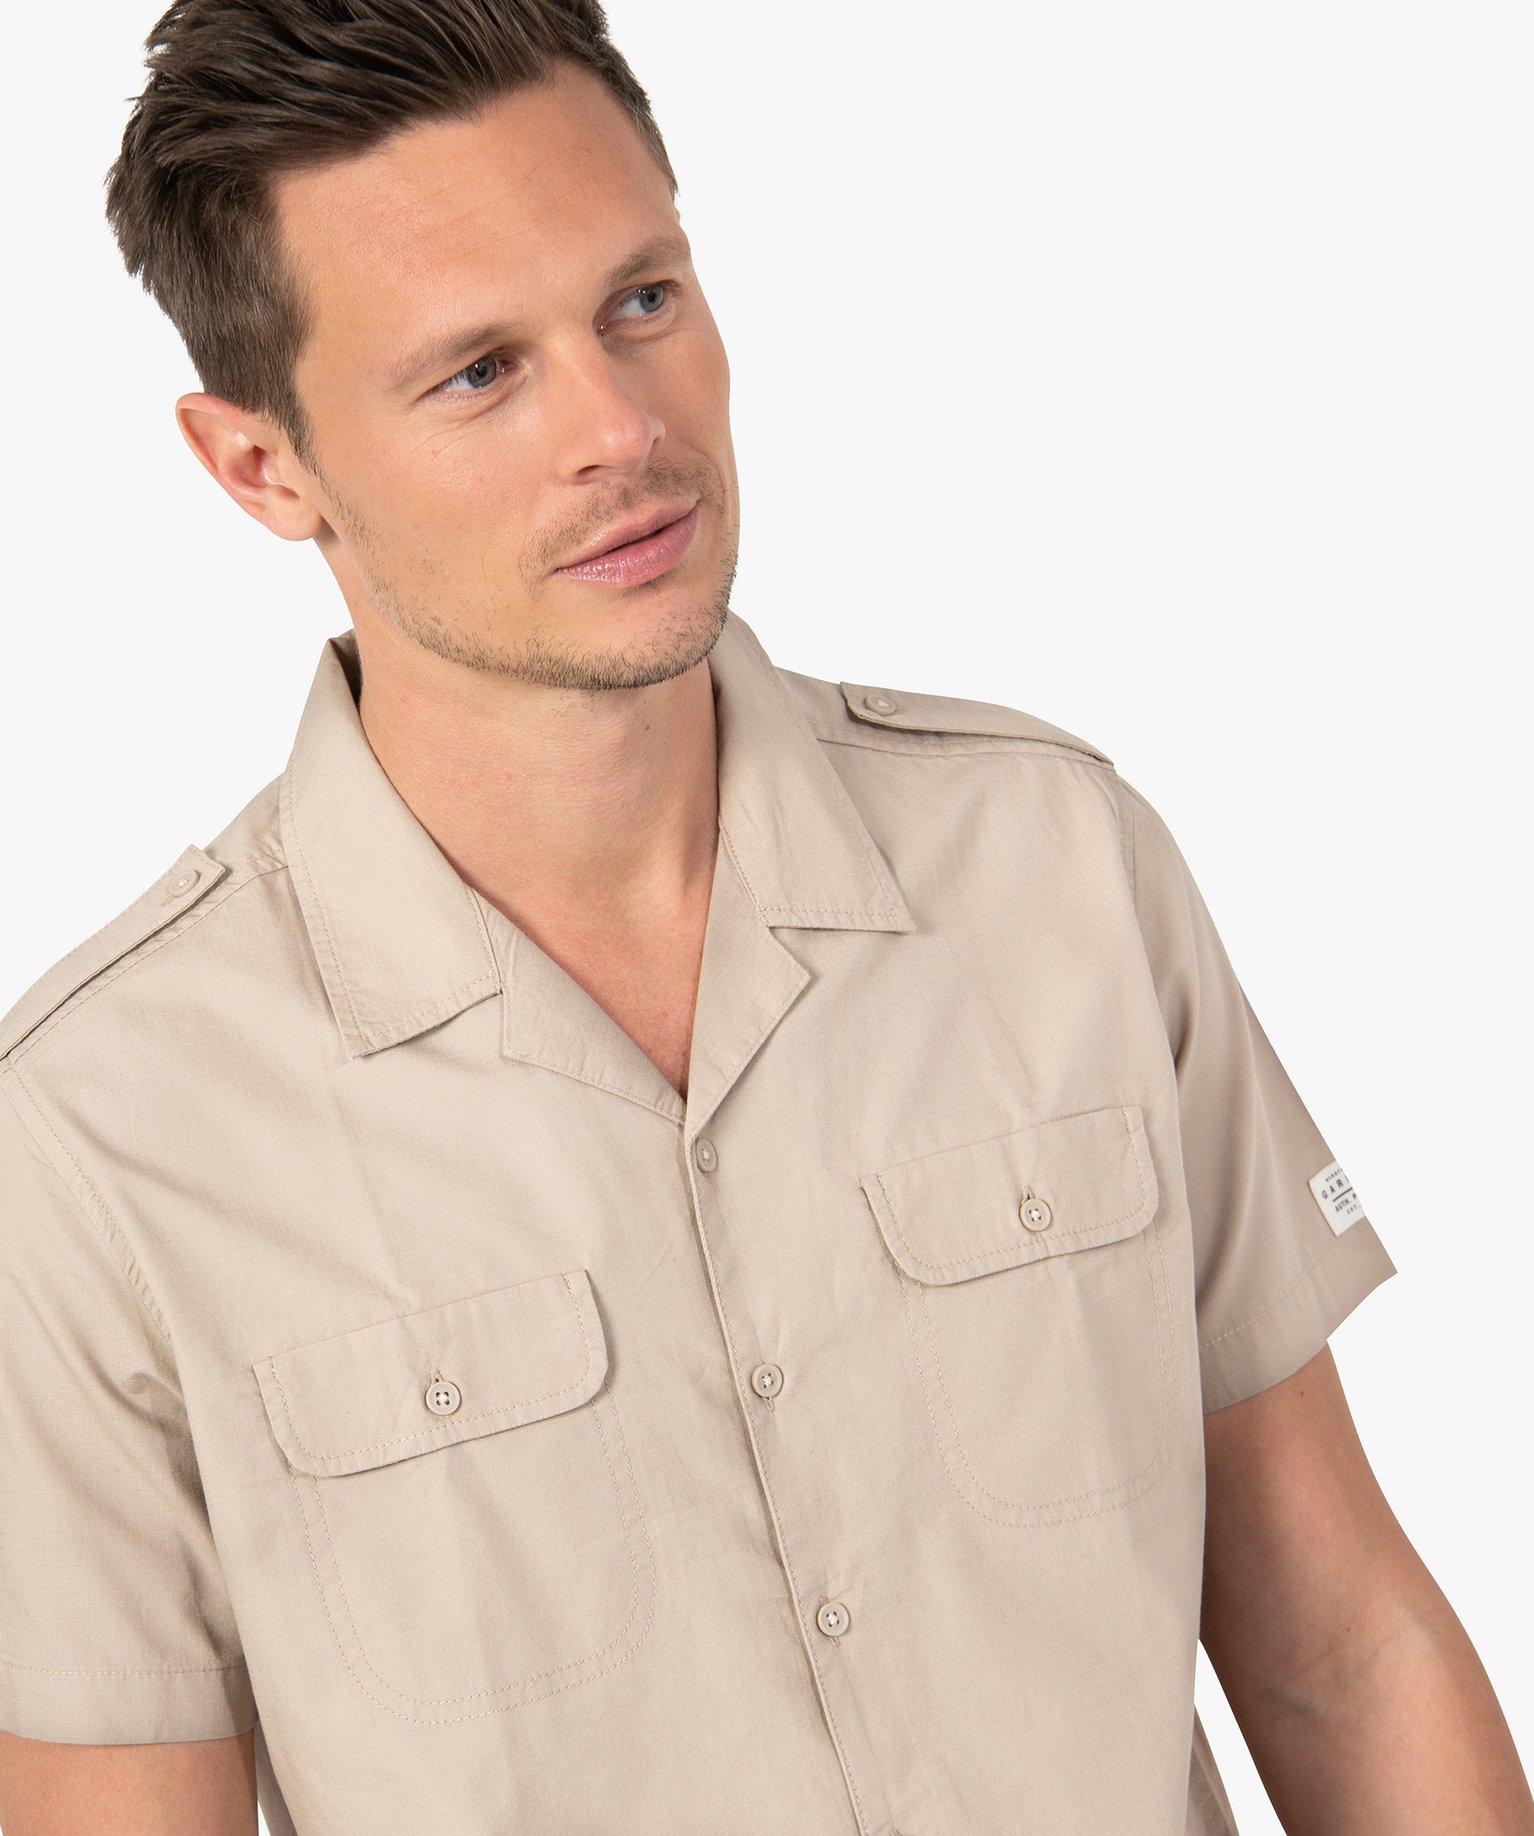 chemise homme a manches courtes saharienne beige chemise manches courtes